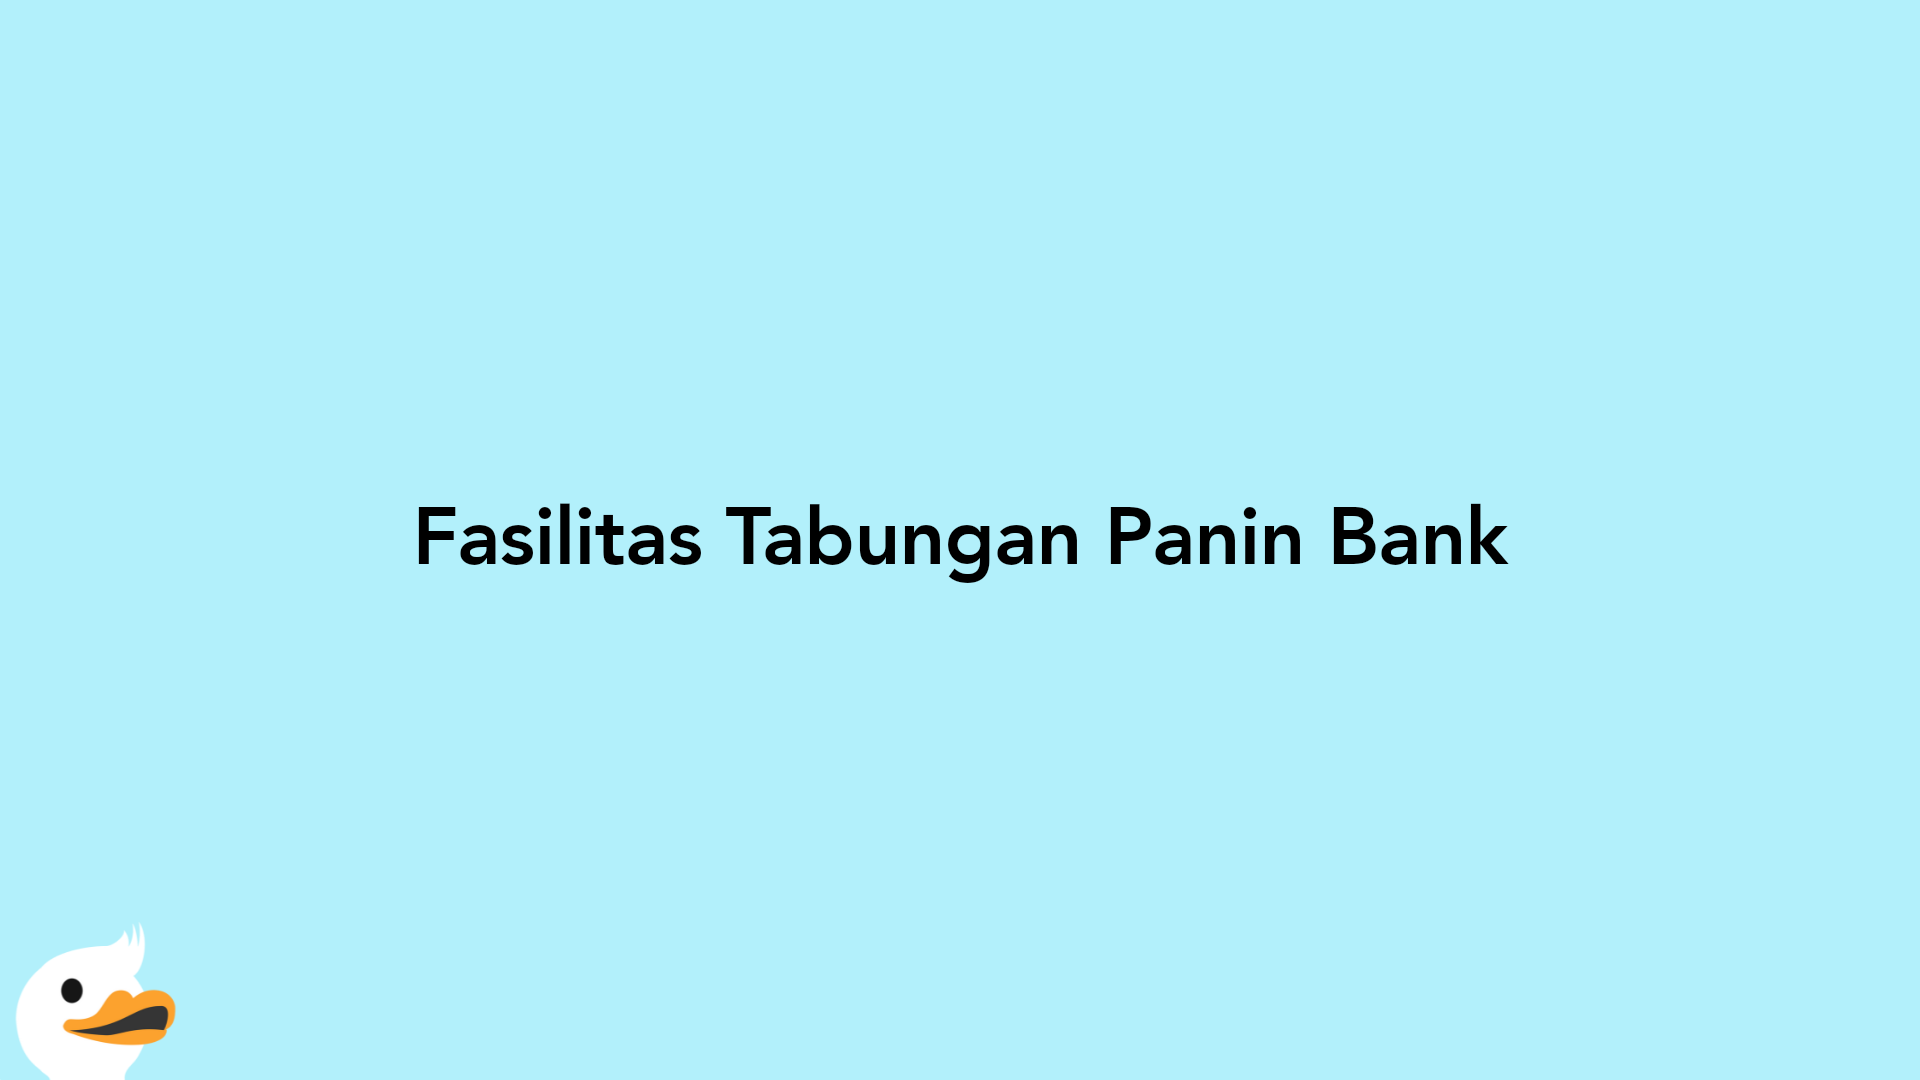 Fasilitas Tabungan Panin Bank